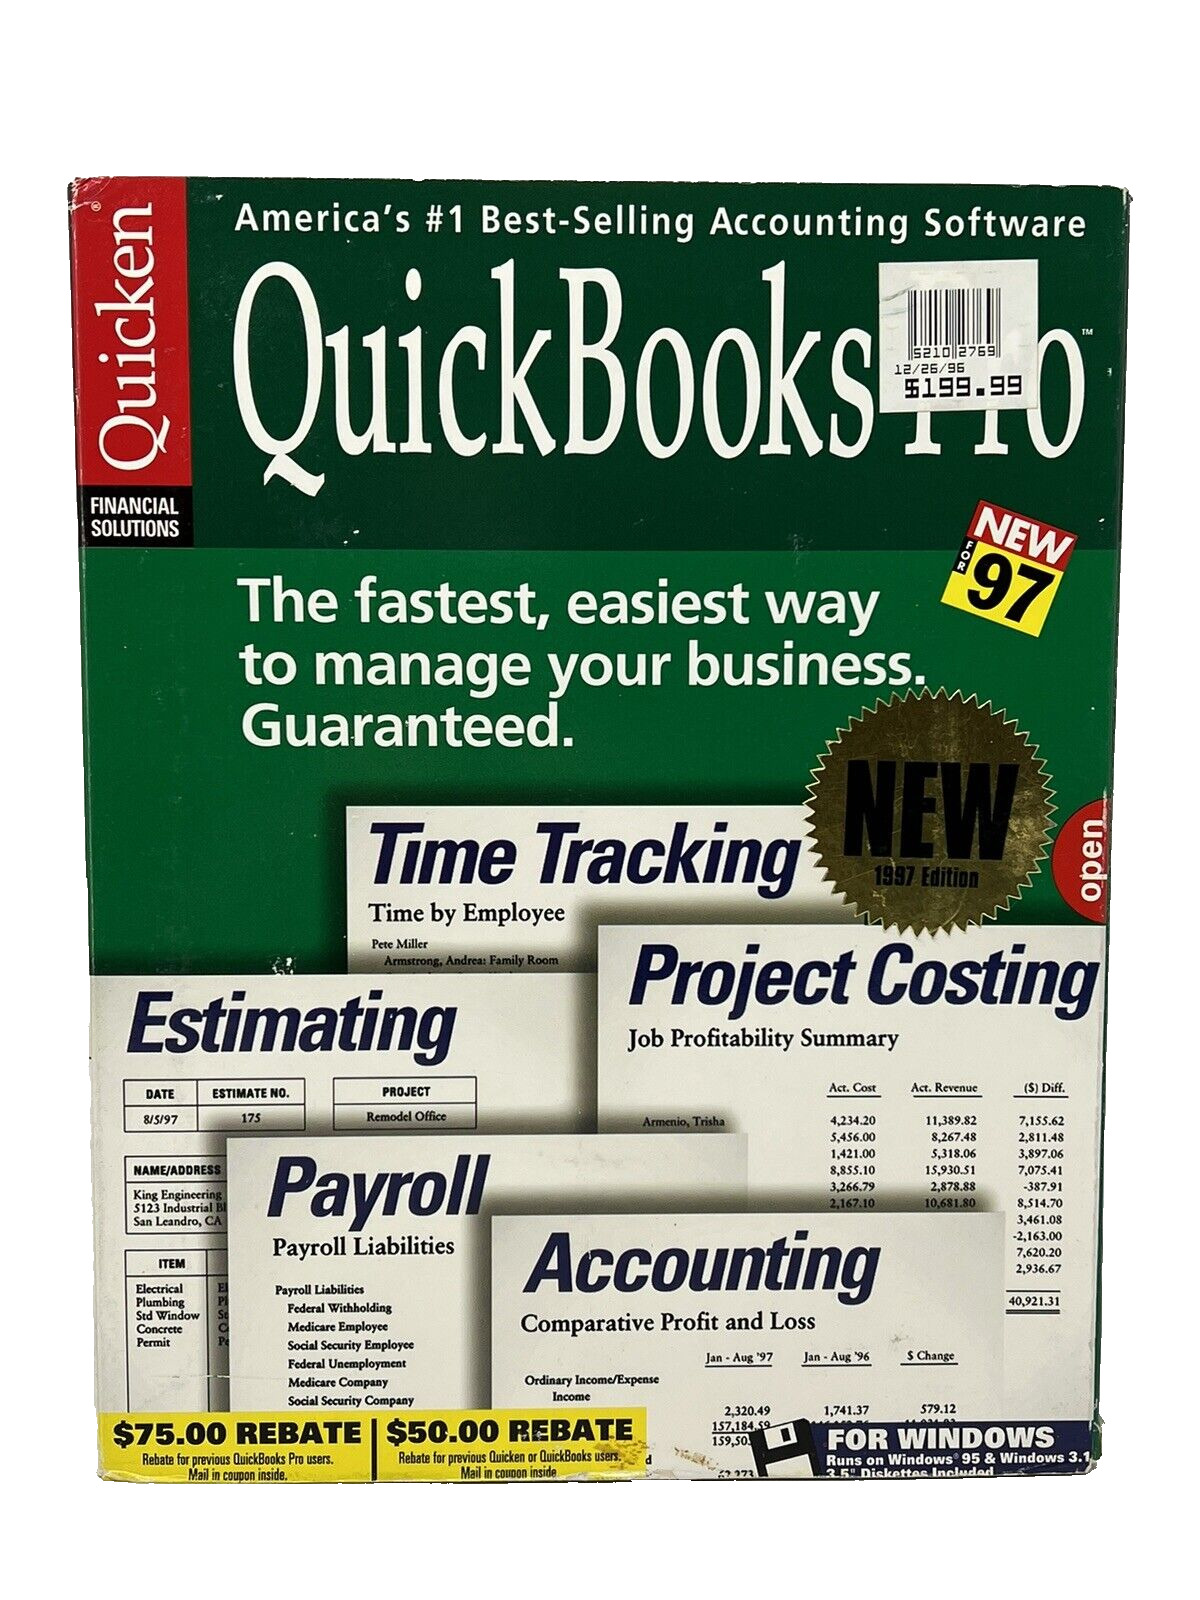 Intuit QuickBooks Pro Version 5.0 for Windows 95 & 3.1 Vintage 90s 3.5\